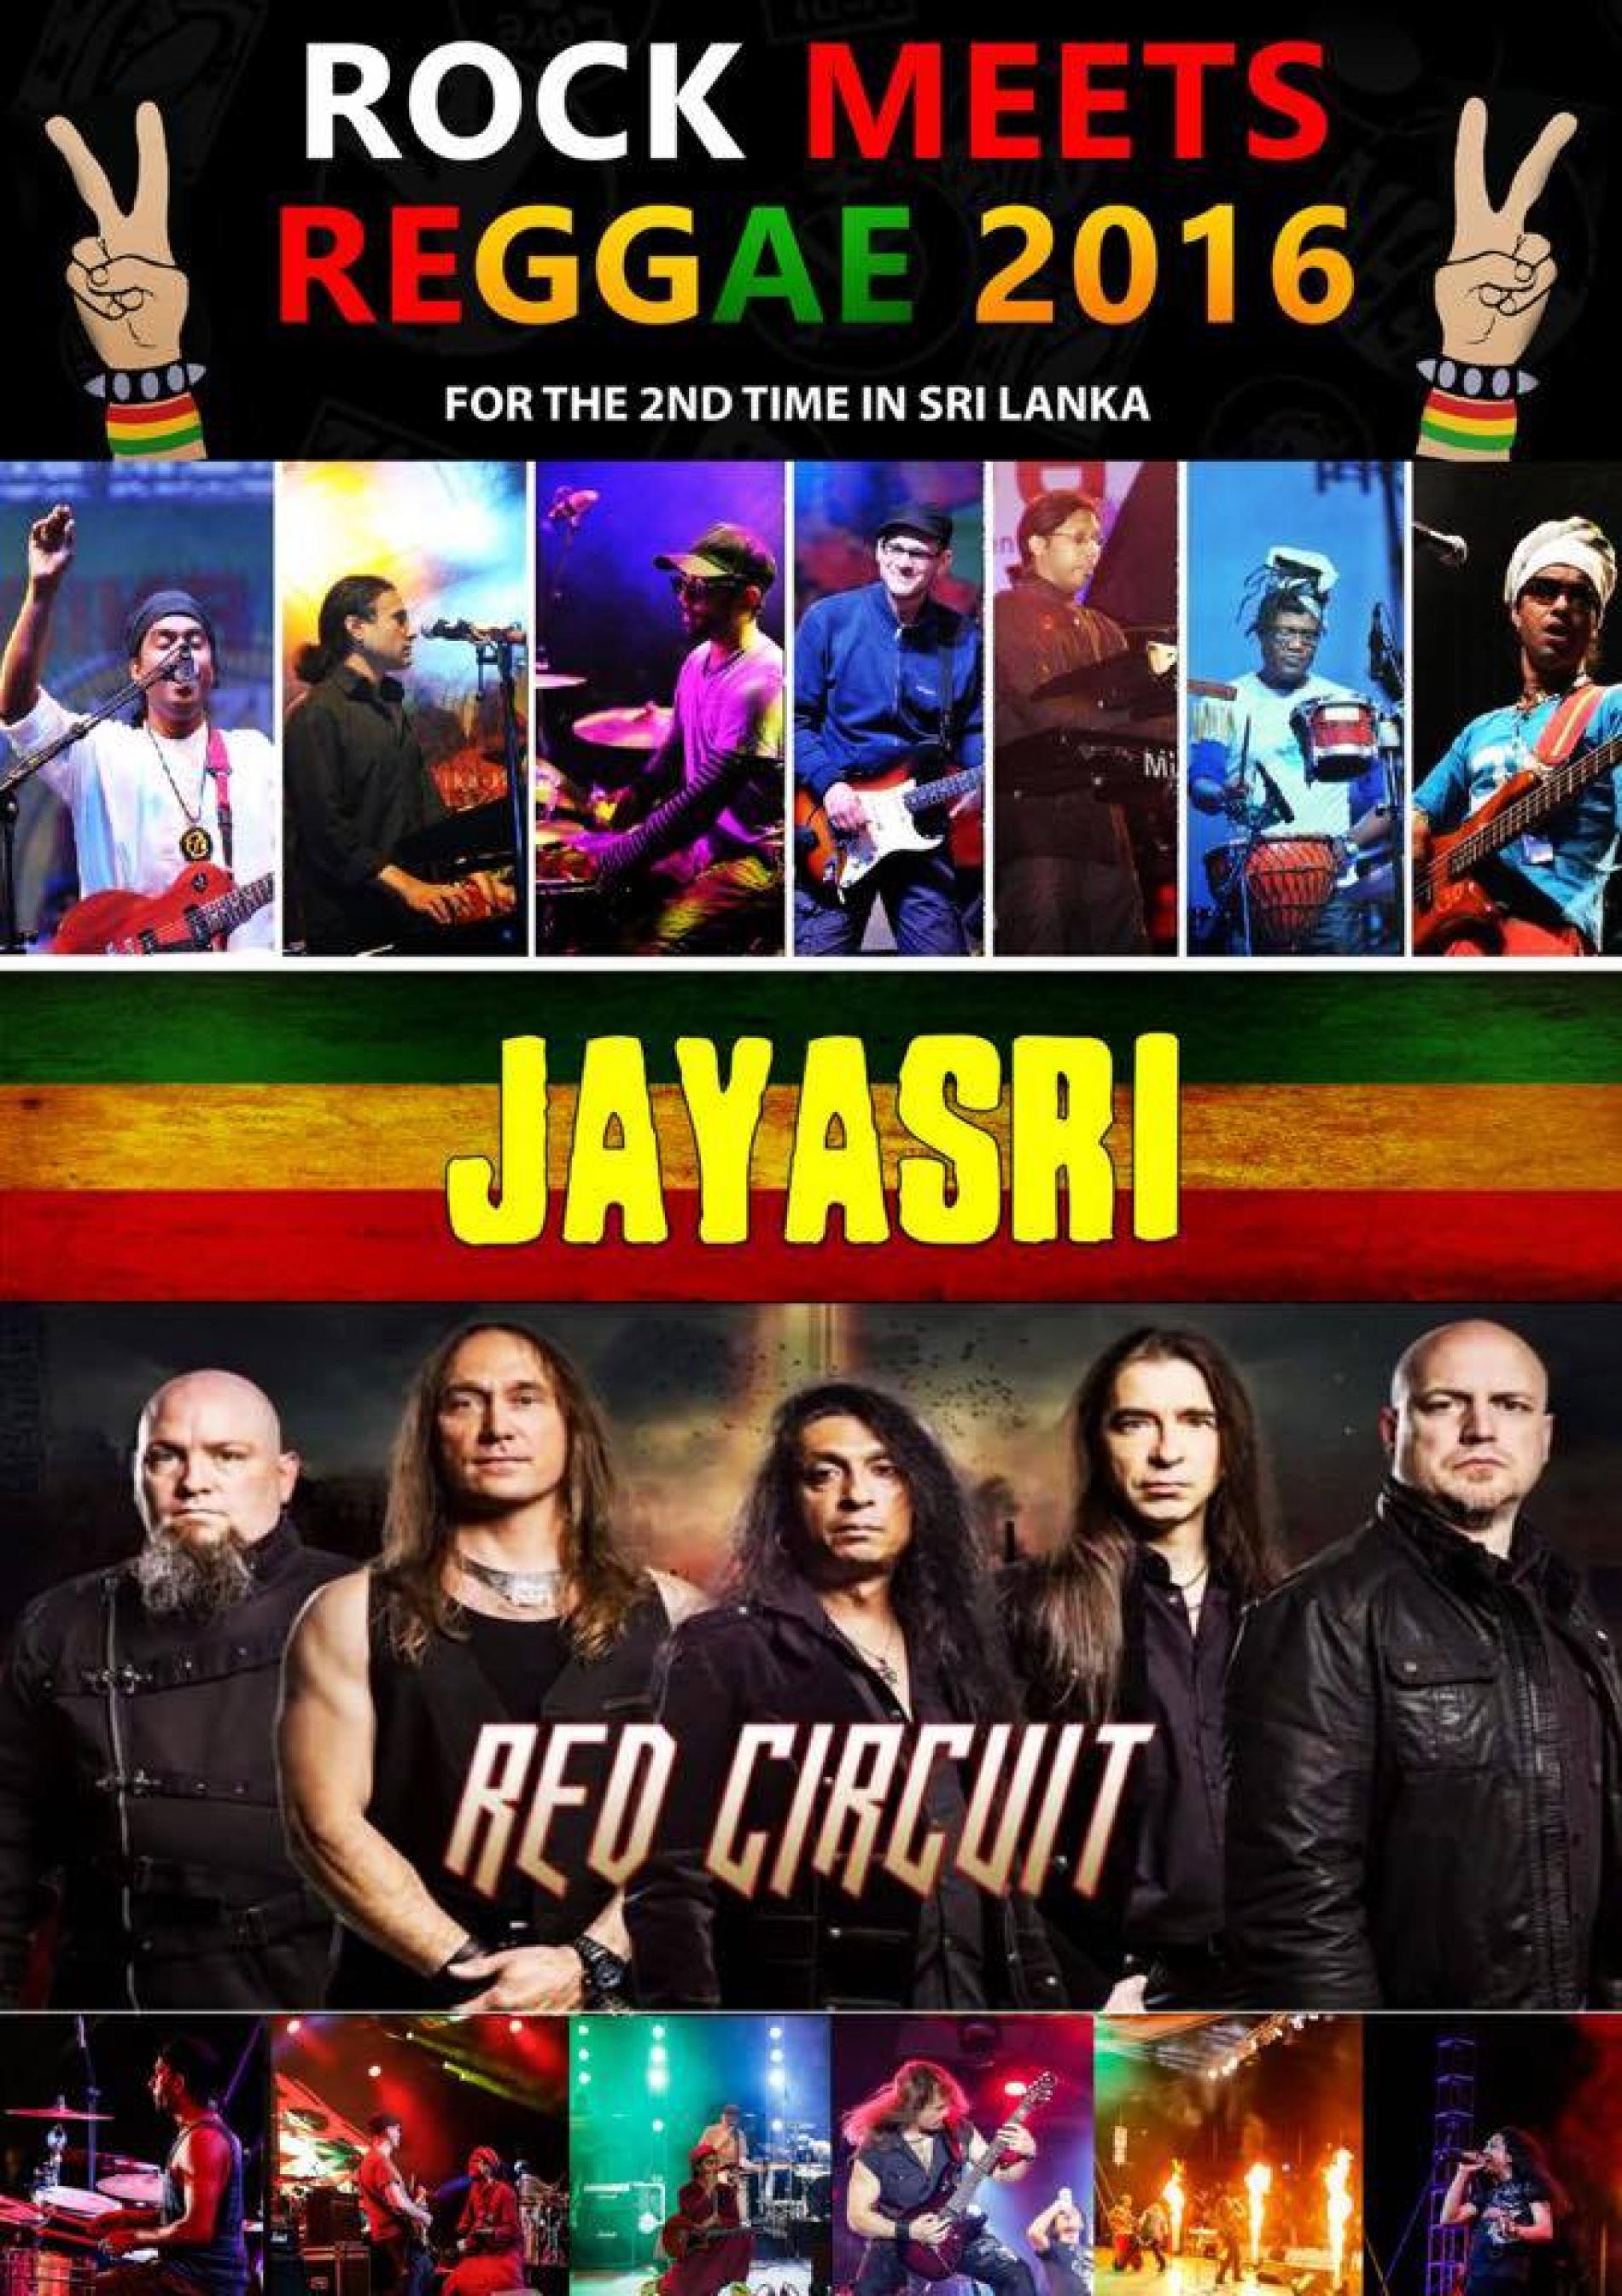 The Rock Meets Reggae Concert Announcement